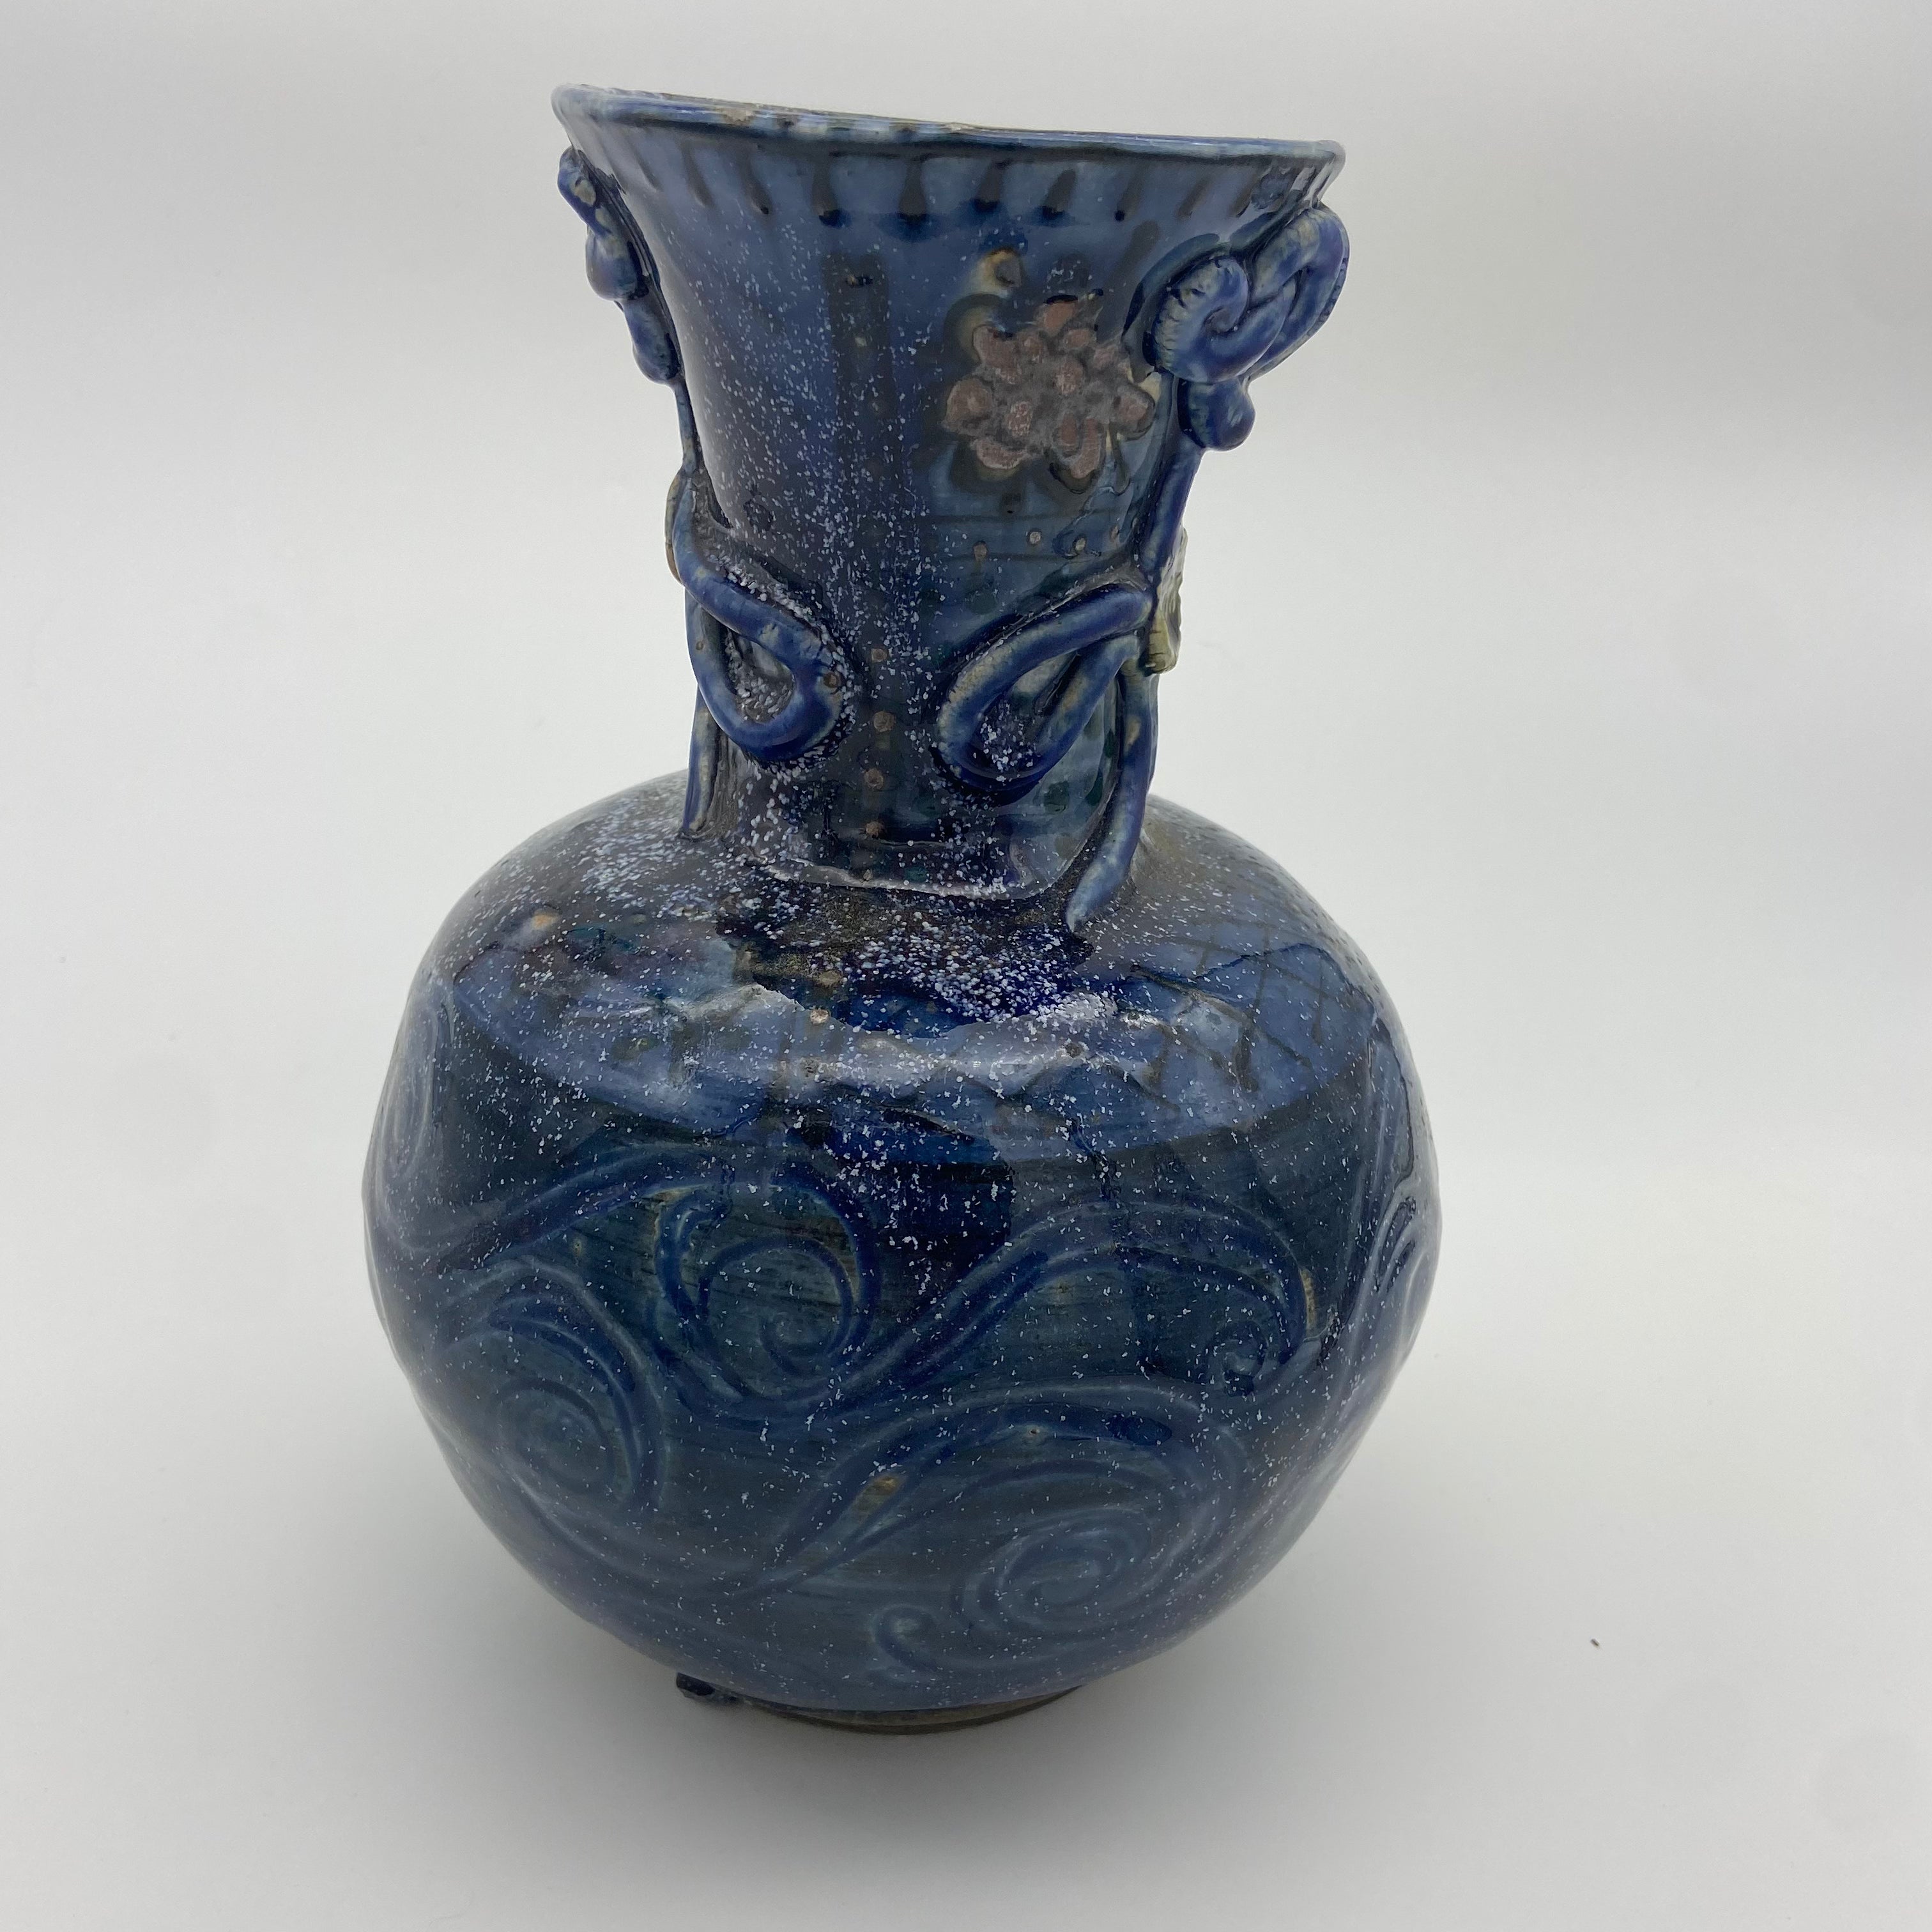 Deep Blue Ceramic Vessel by Kim Sheerin